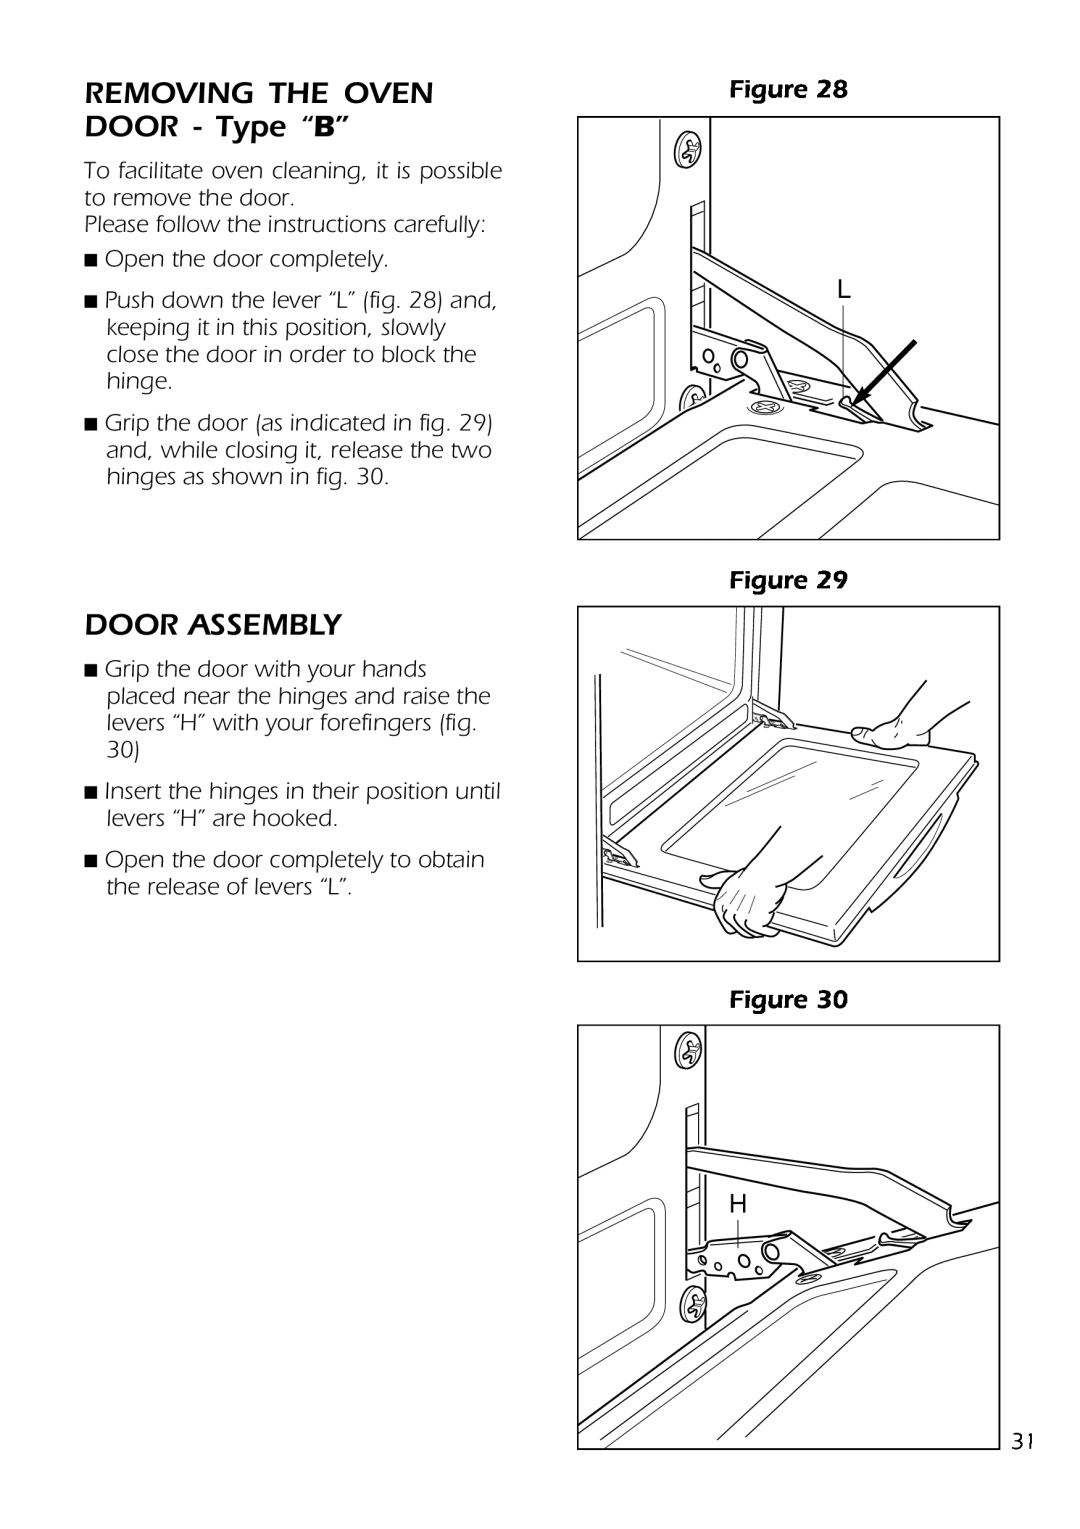 DeLonghi D 61 E manual REMOVING THE OVEN DOOR - Type “B”, Door Assembly 